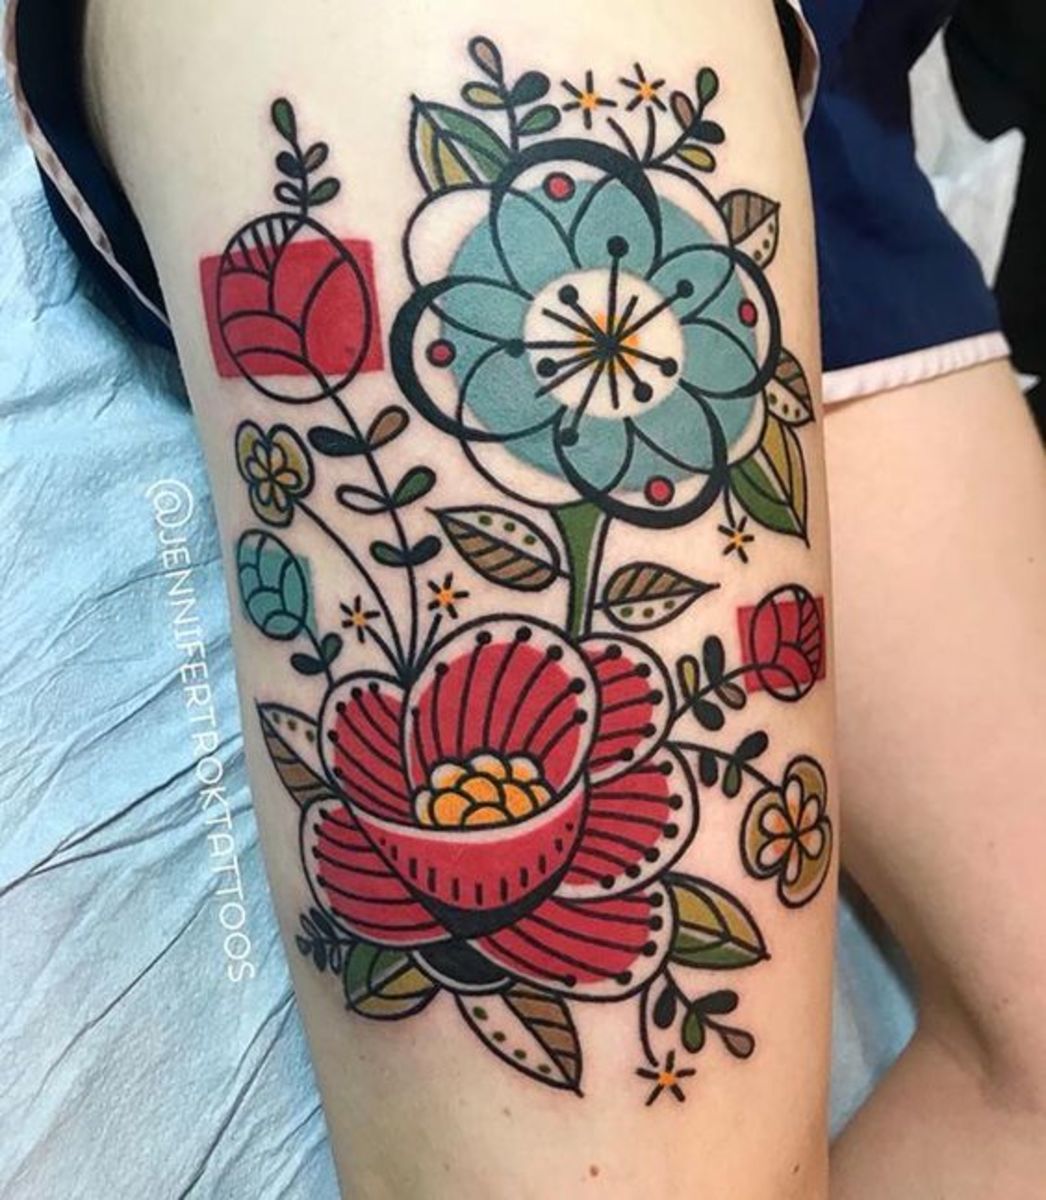 flower-tattoo-inspiration